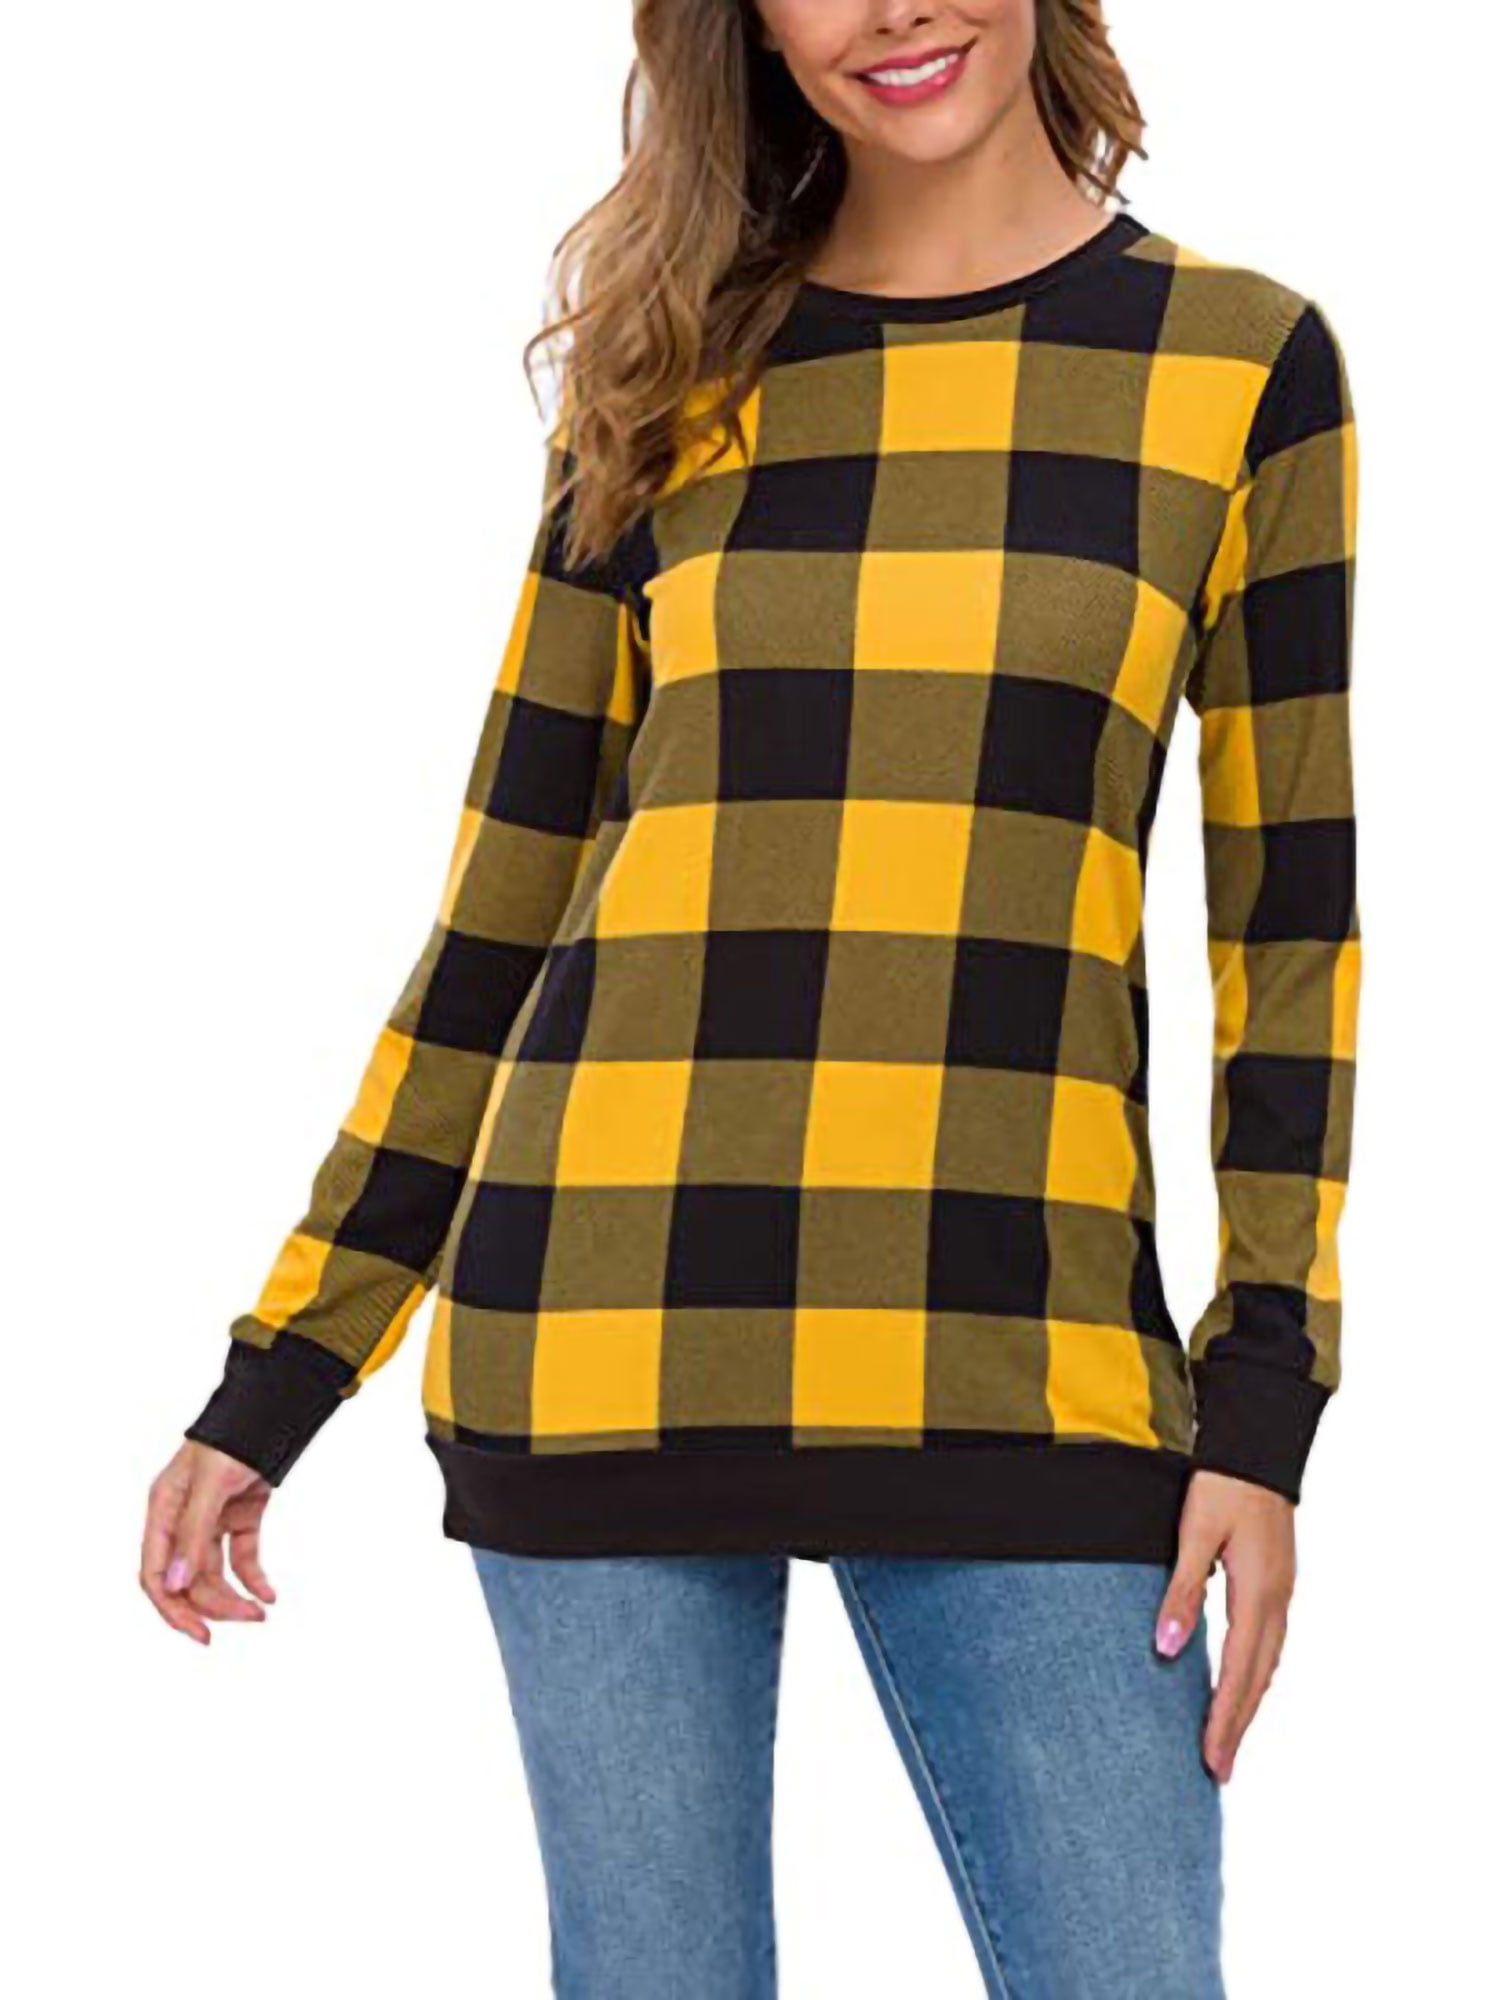 Buffalo Plaid Shirt for Women Lace Stitching Long Sleeve Elegant Blouse Tops Casual Round Neck Tunic Shirts 